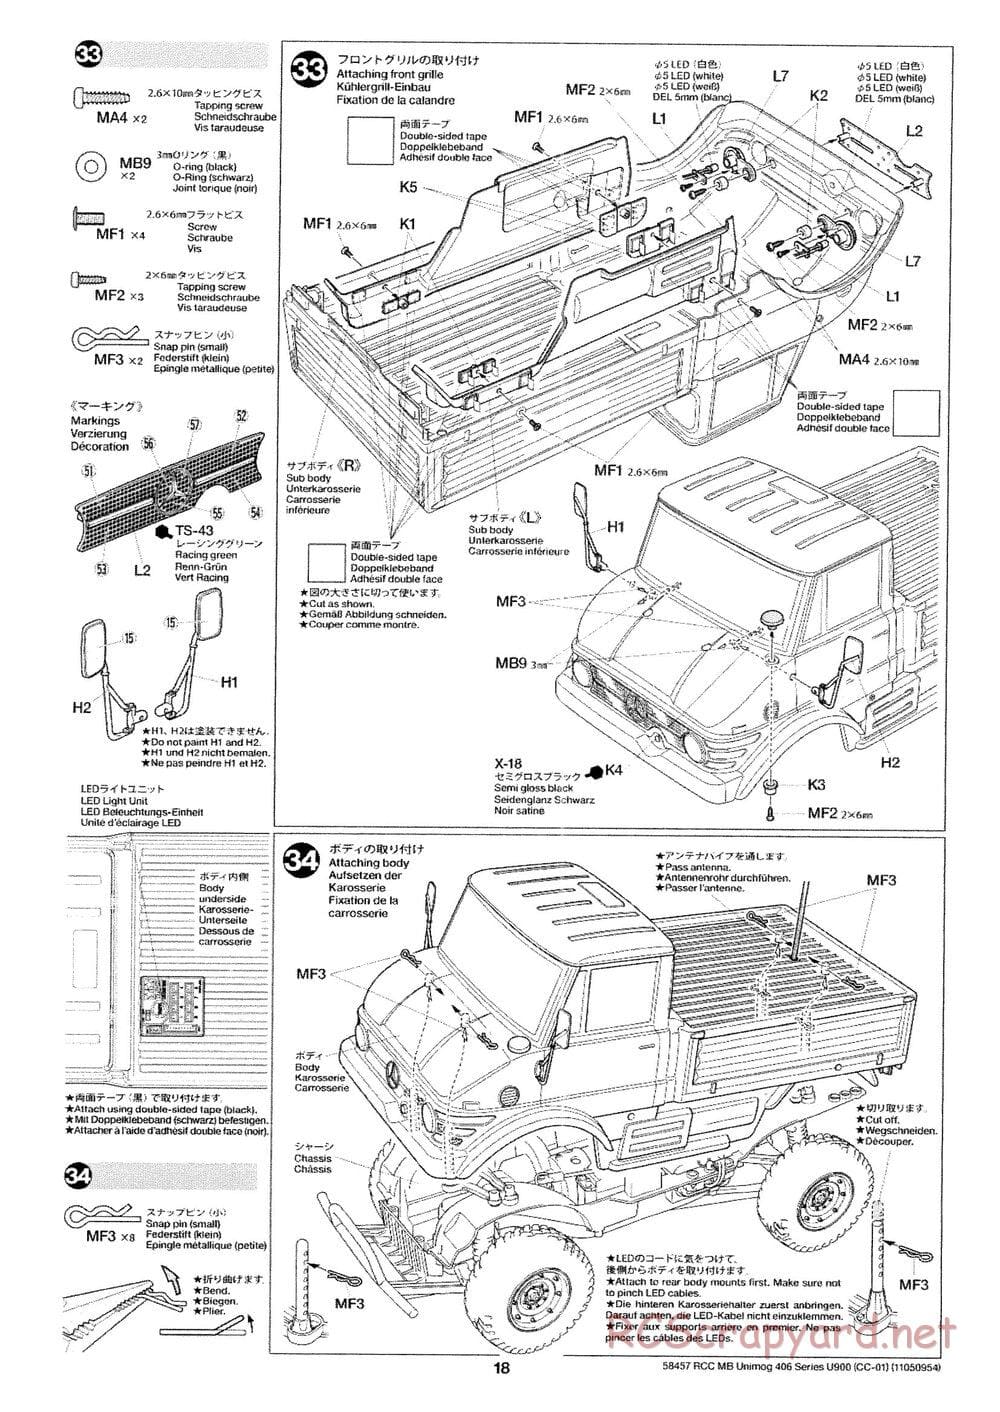 Tamiya - Mercedes-Benz Unimog 406 Series U900 - CC-01 Chassis - Manual - Page 18